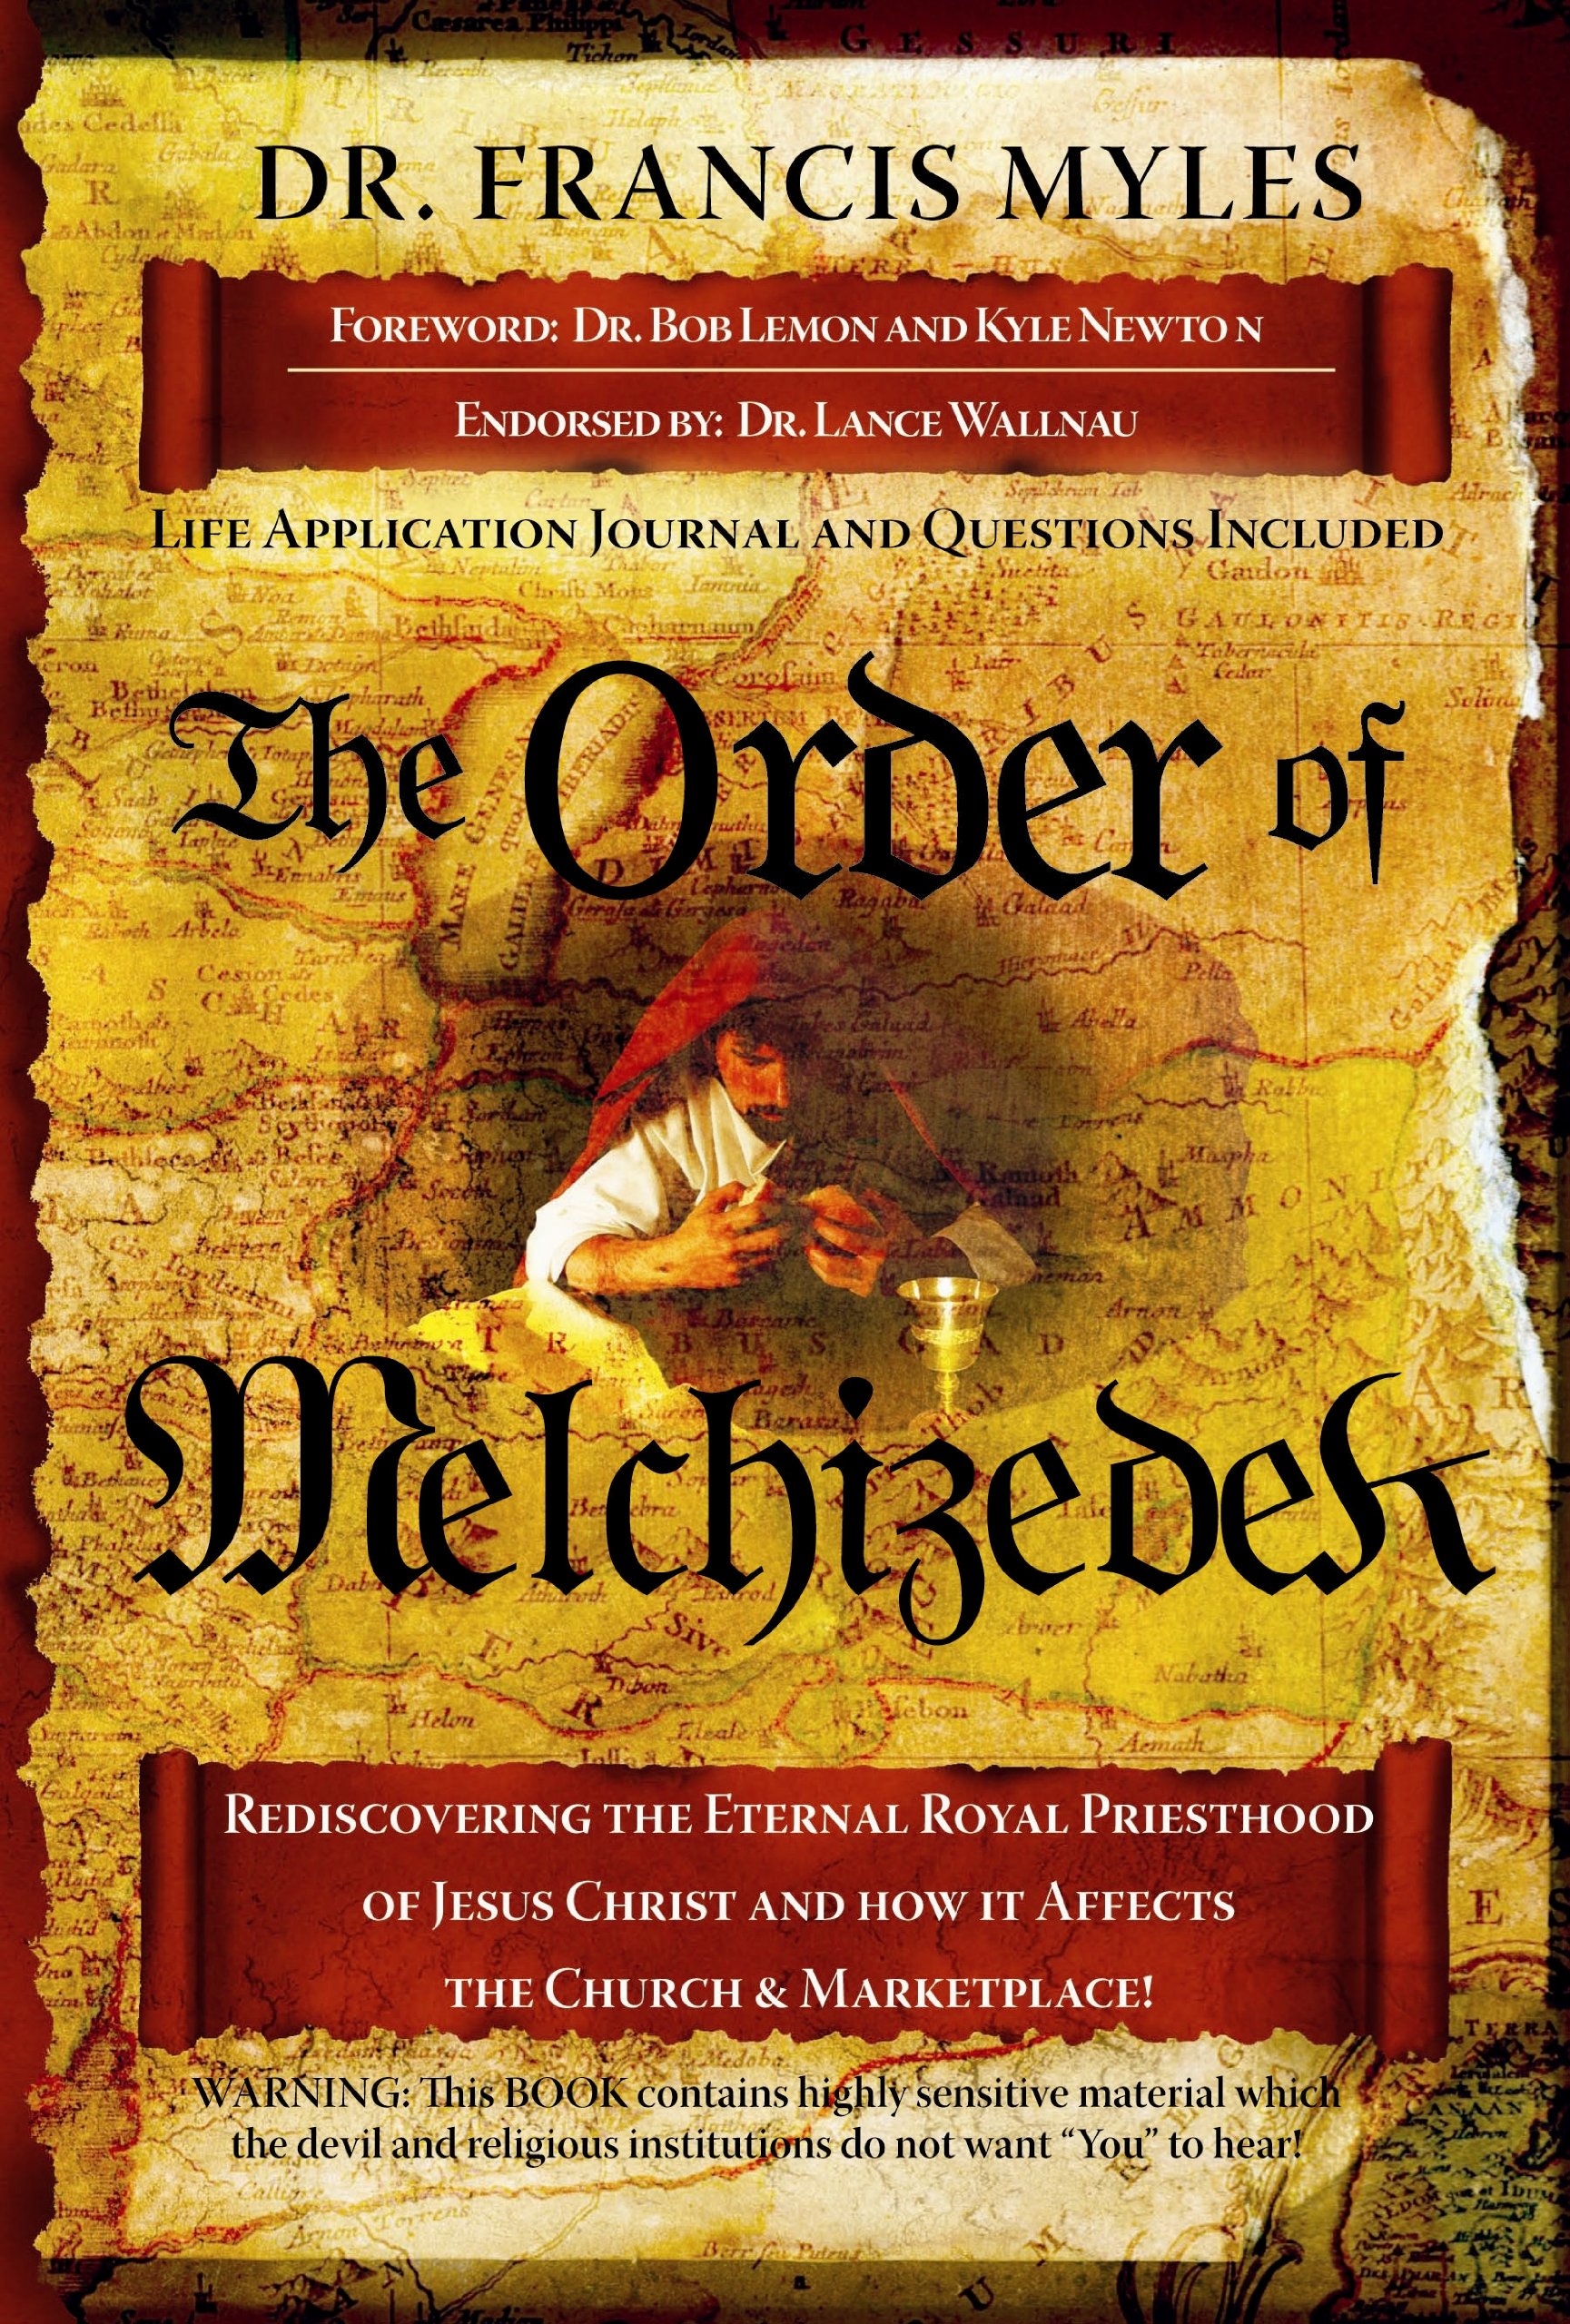 Melchizedek Book Bonus